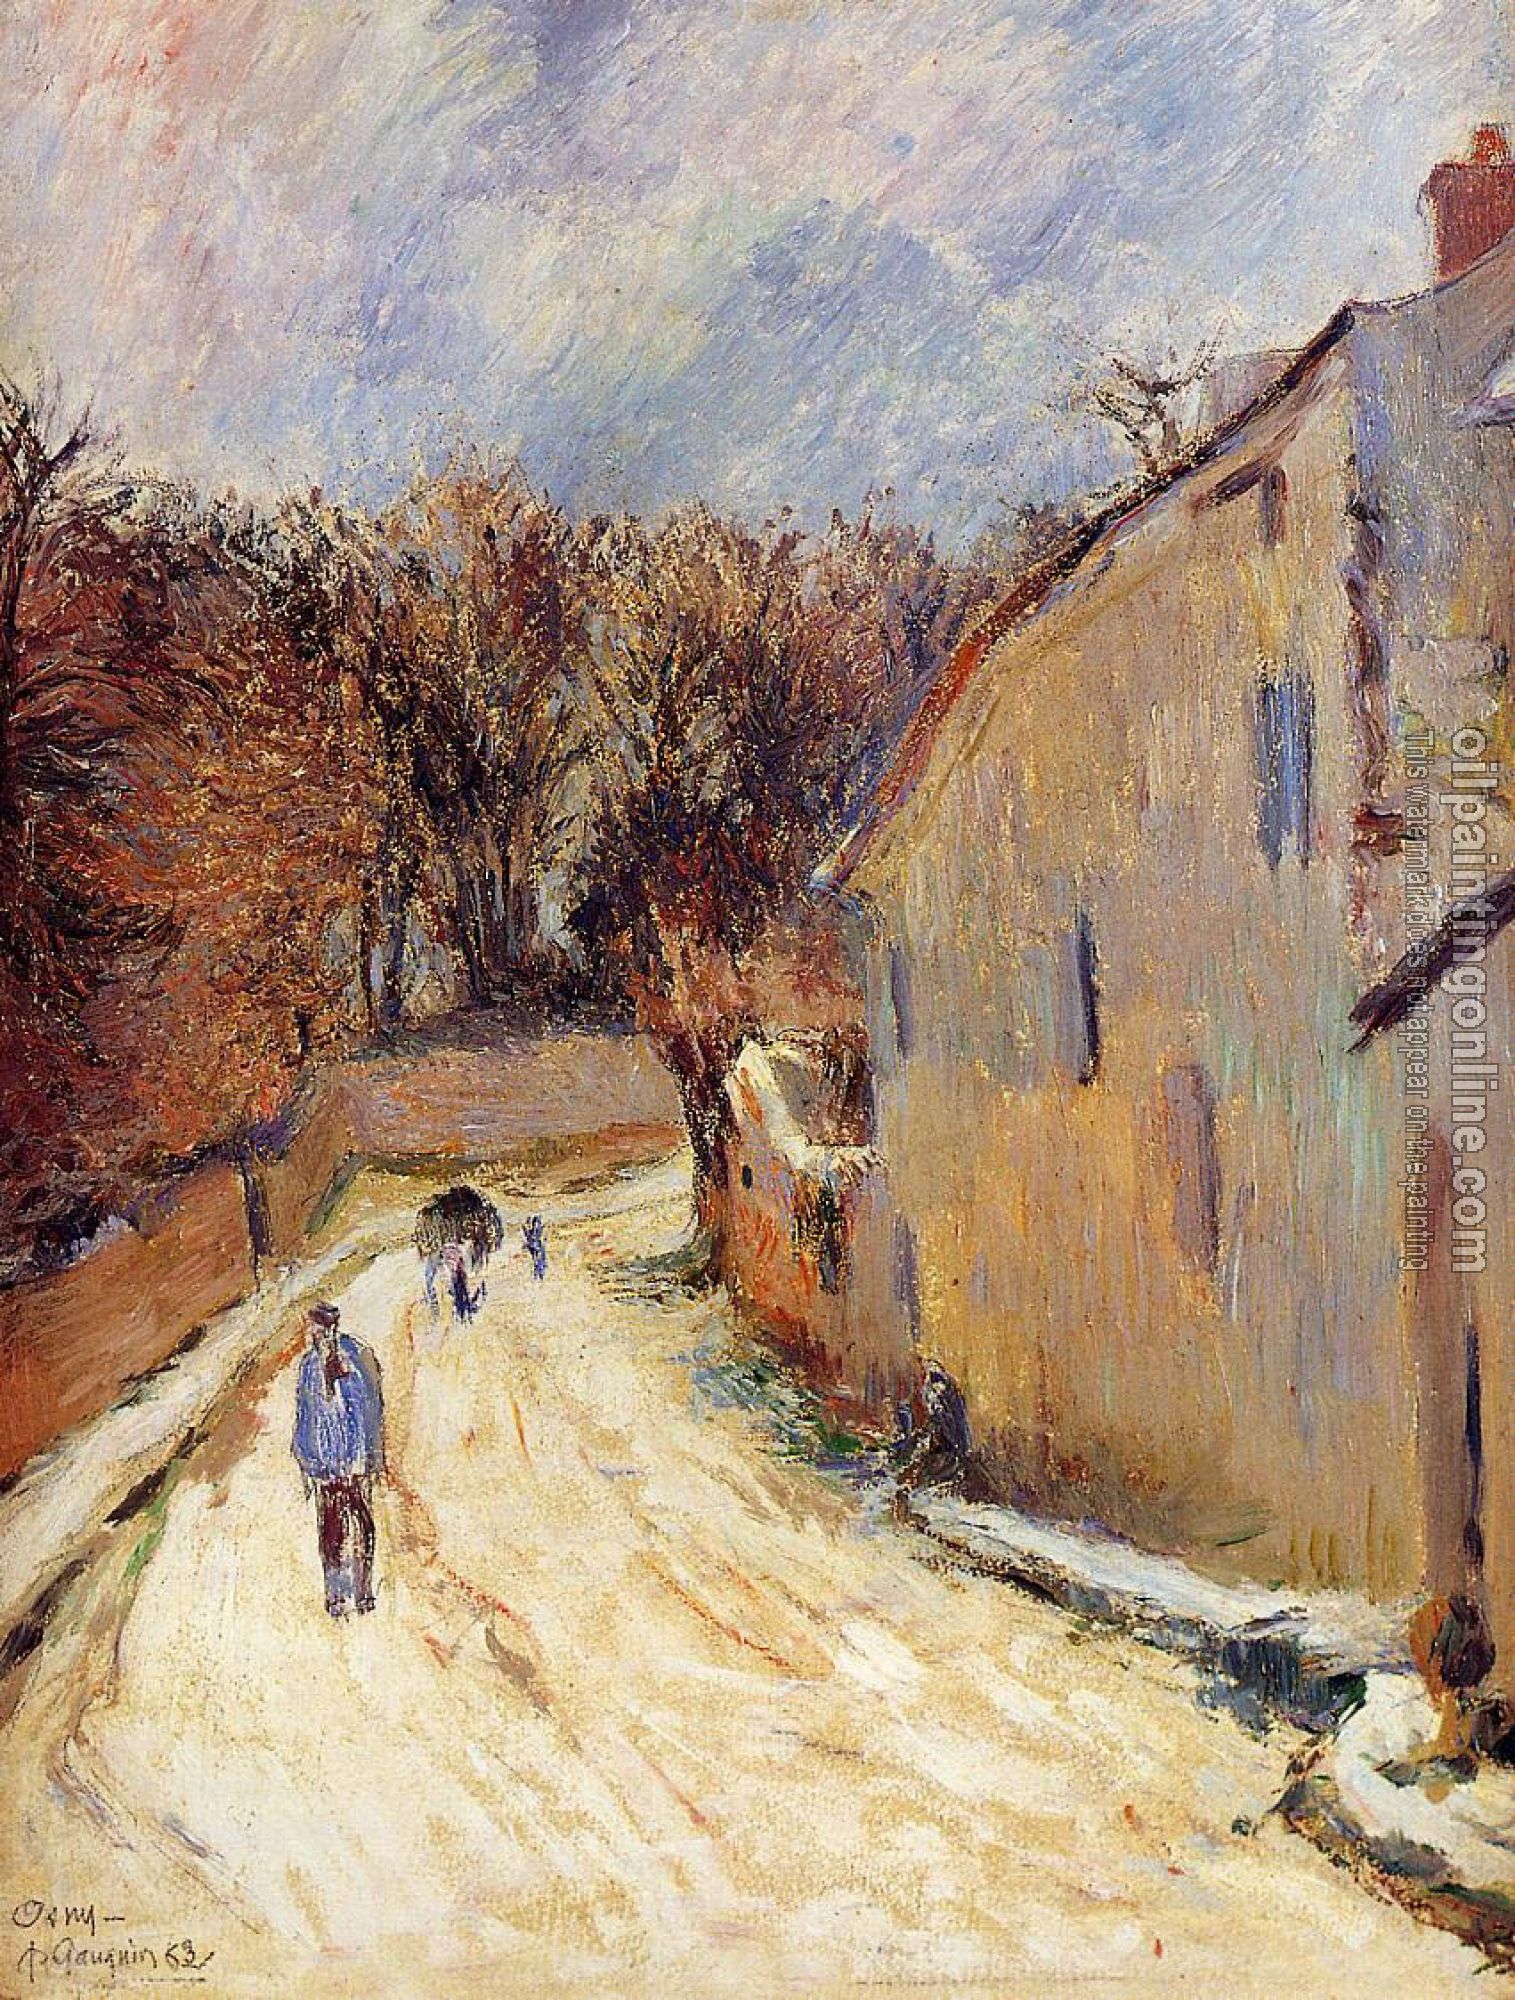 Gauguin, Paul - Osny, rue de Pontoise, Winter